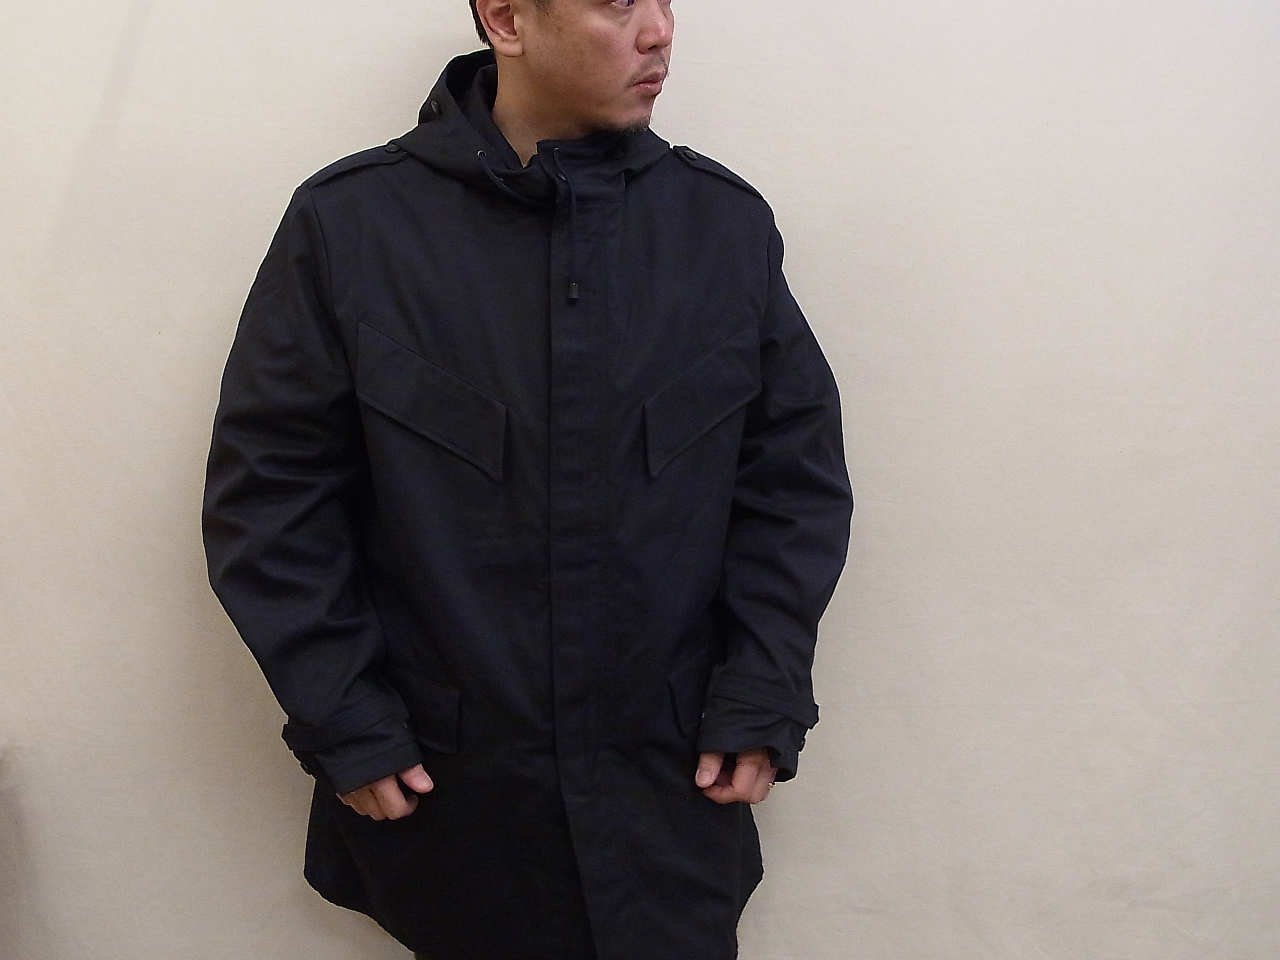 dutchmilitary-hooded-jacket-20190318-3